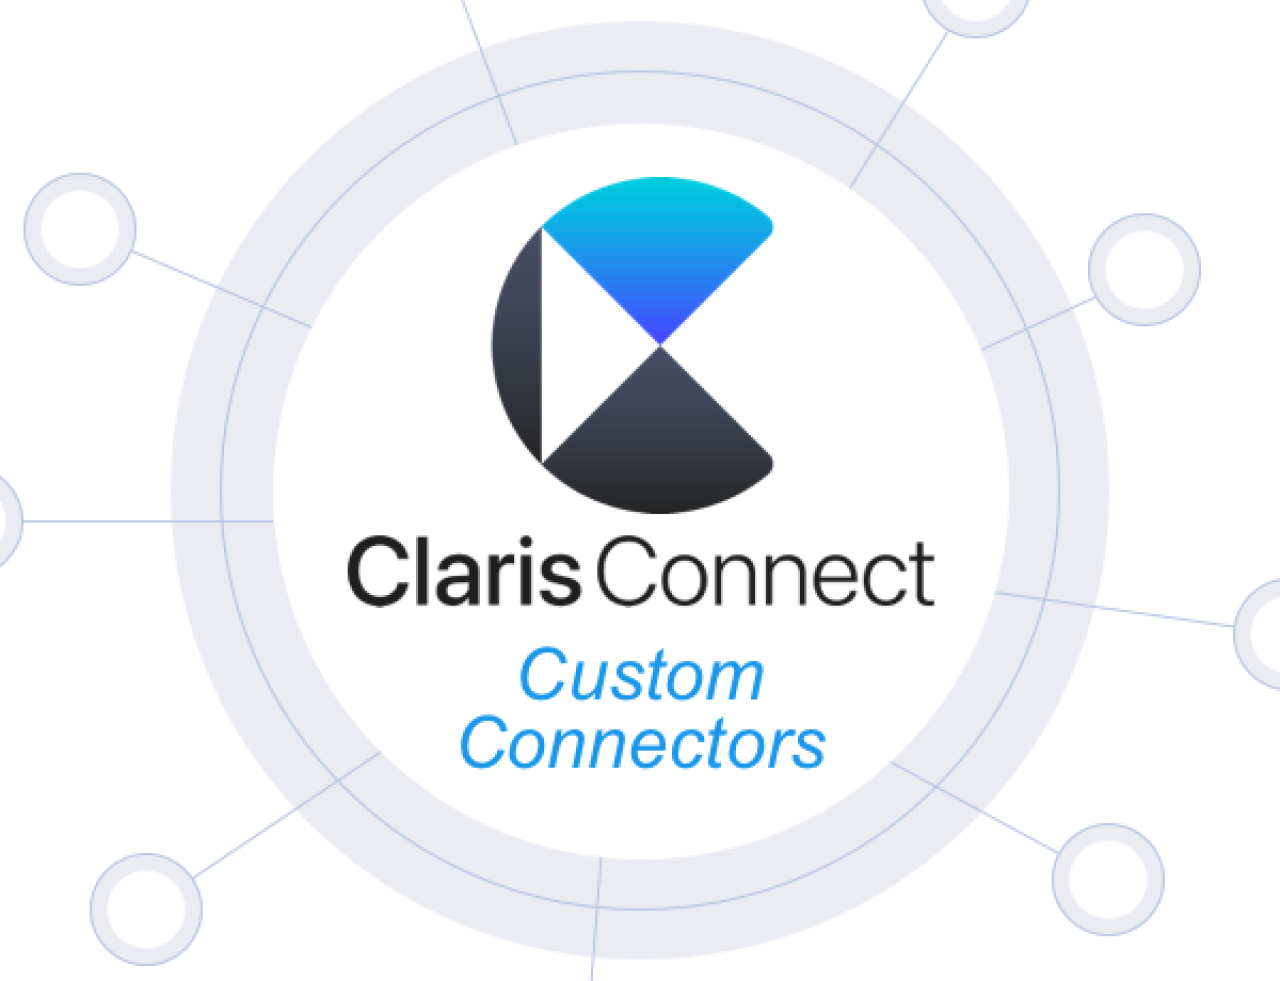 claris connect custom connectors.